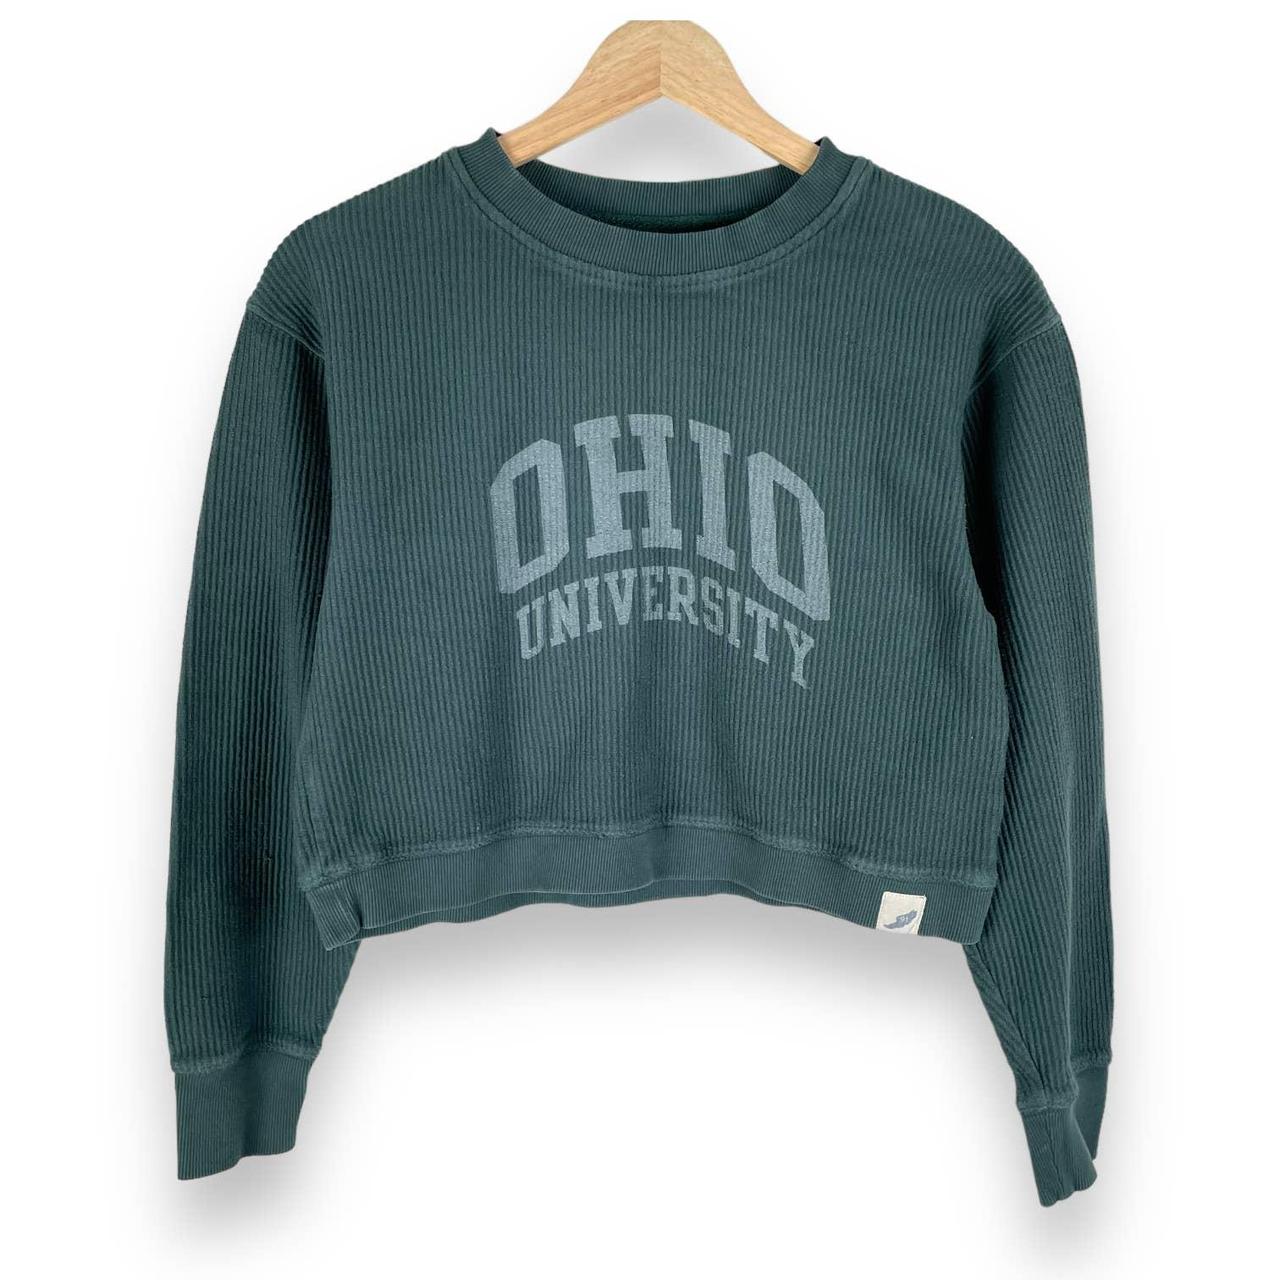 Ohio University Green Ribbed Knit Long Sleeve Crop - Depop